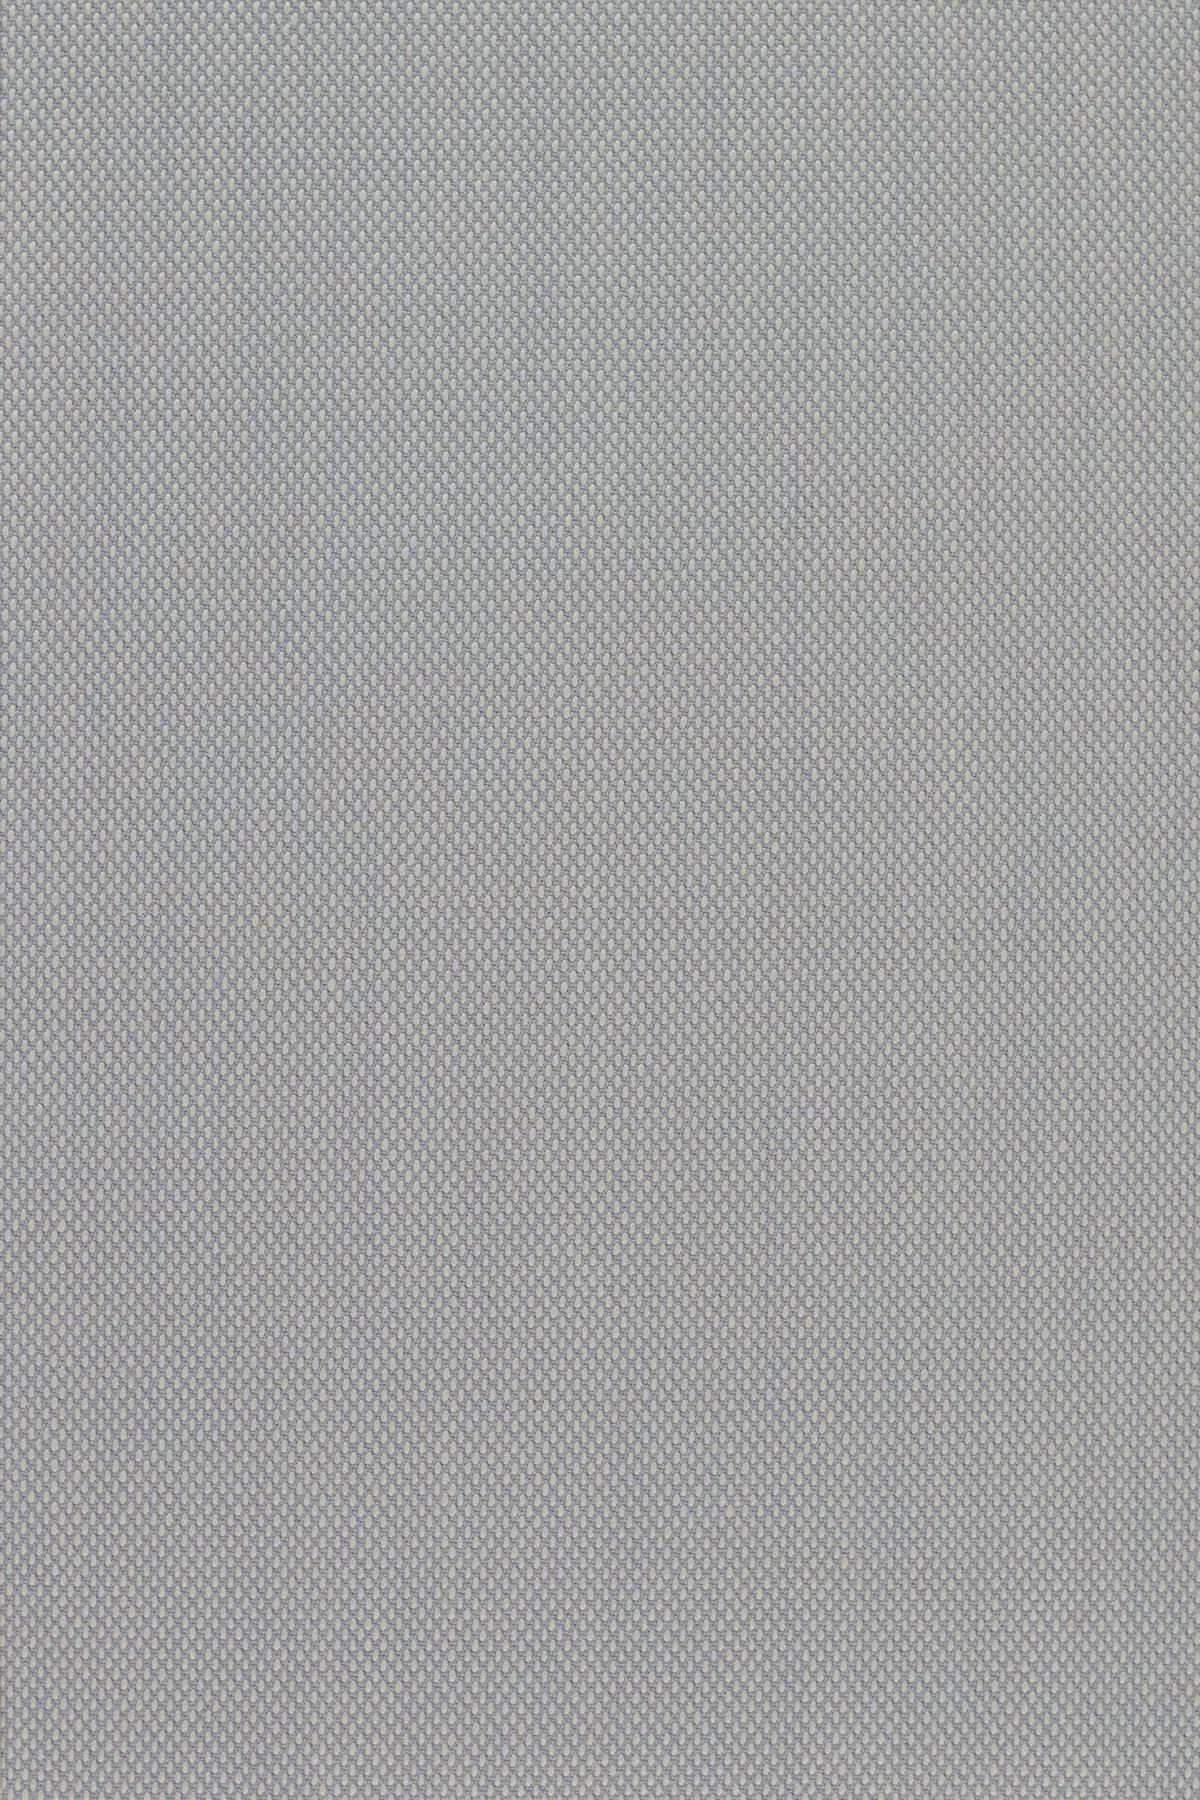 Fabric sample Steelcut Trio 3 105 grey